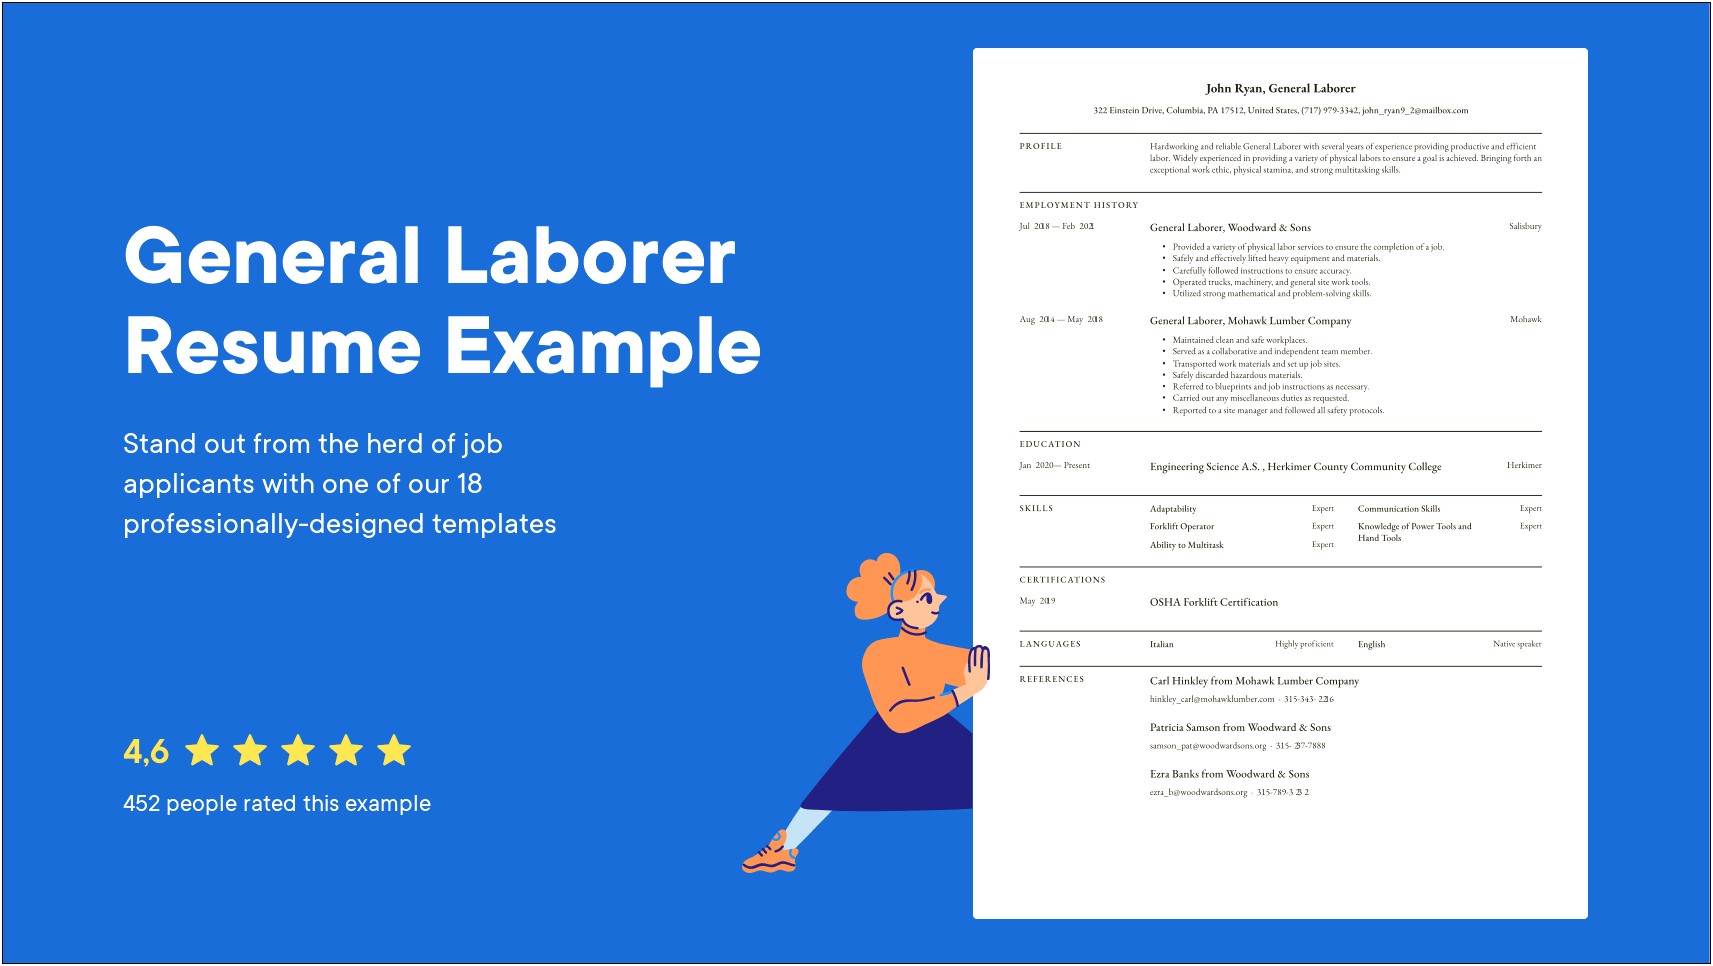 General Labor Job Duties For Resume